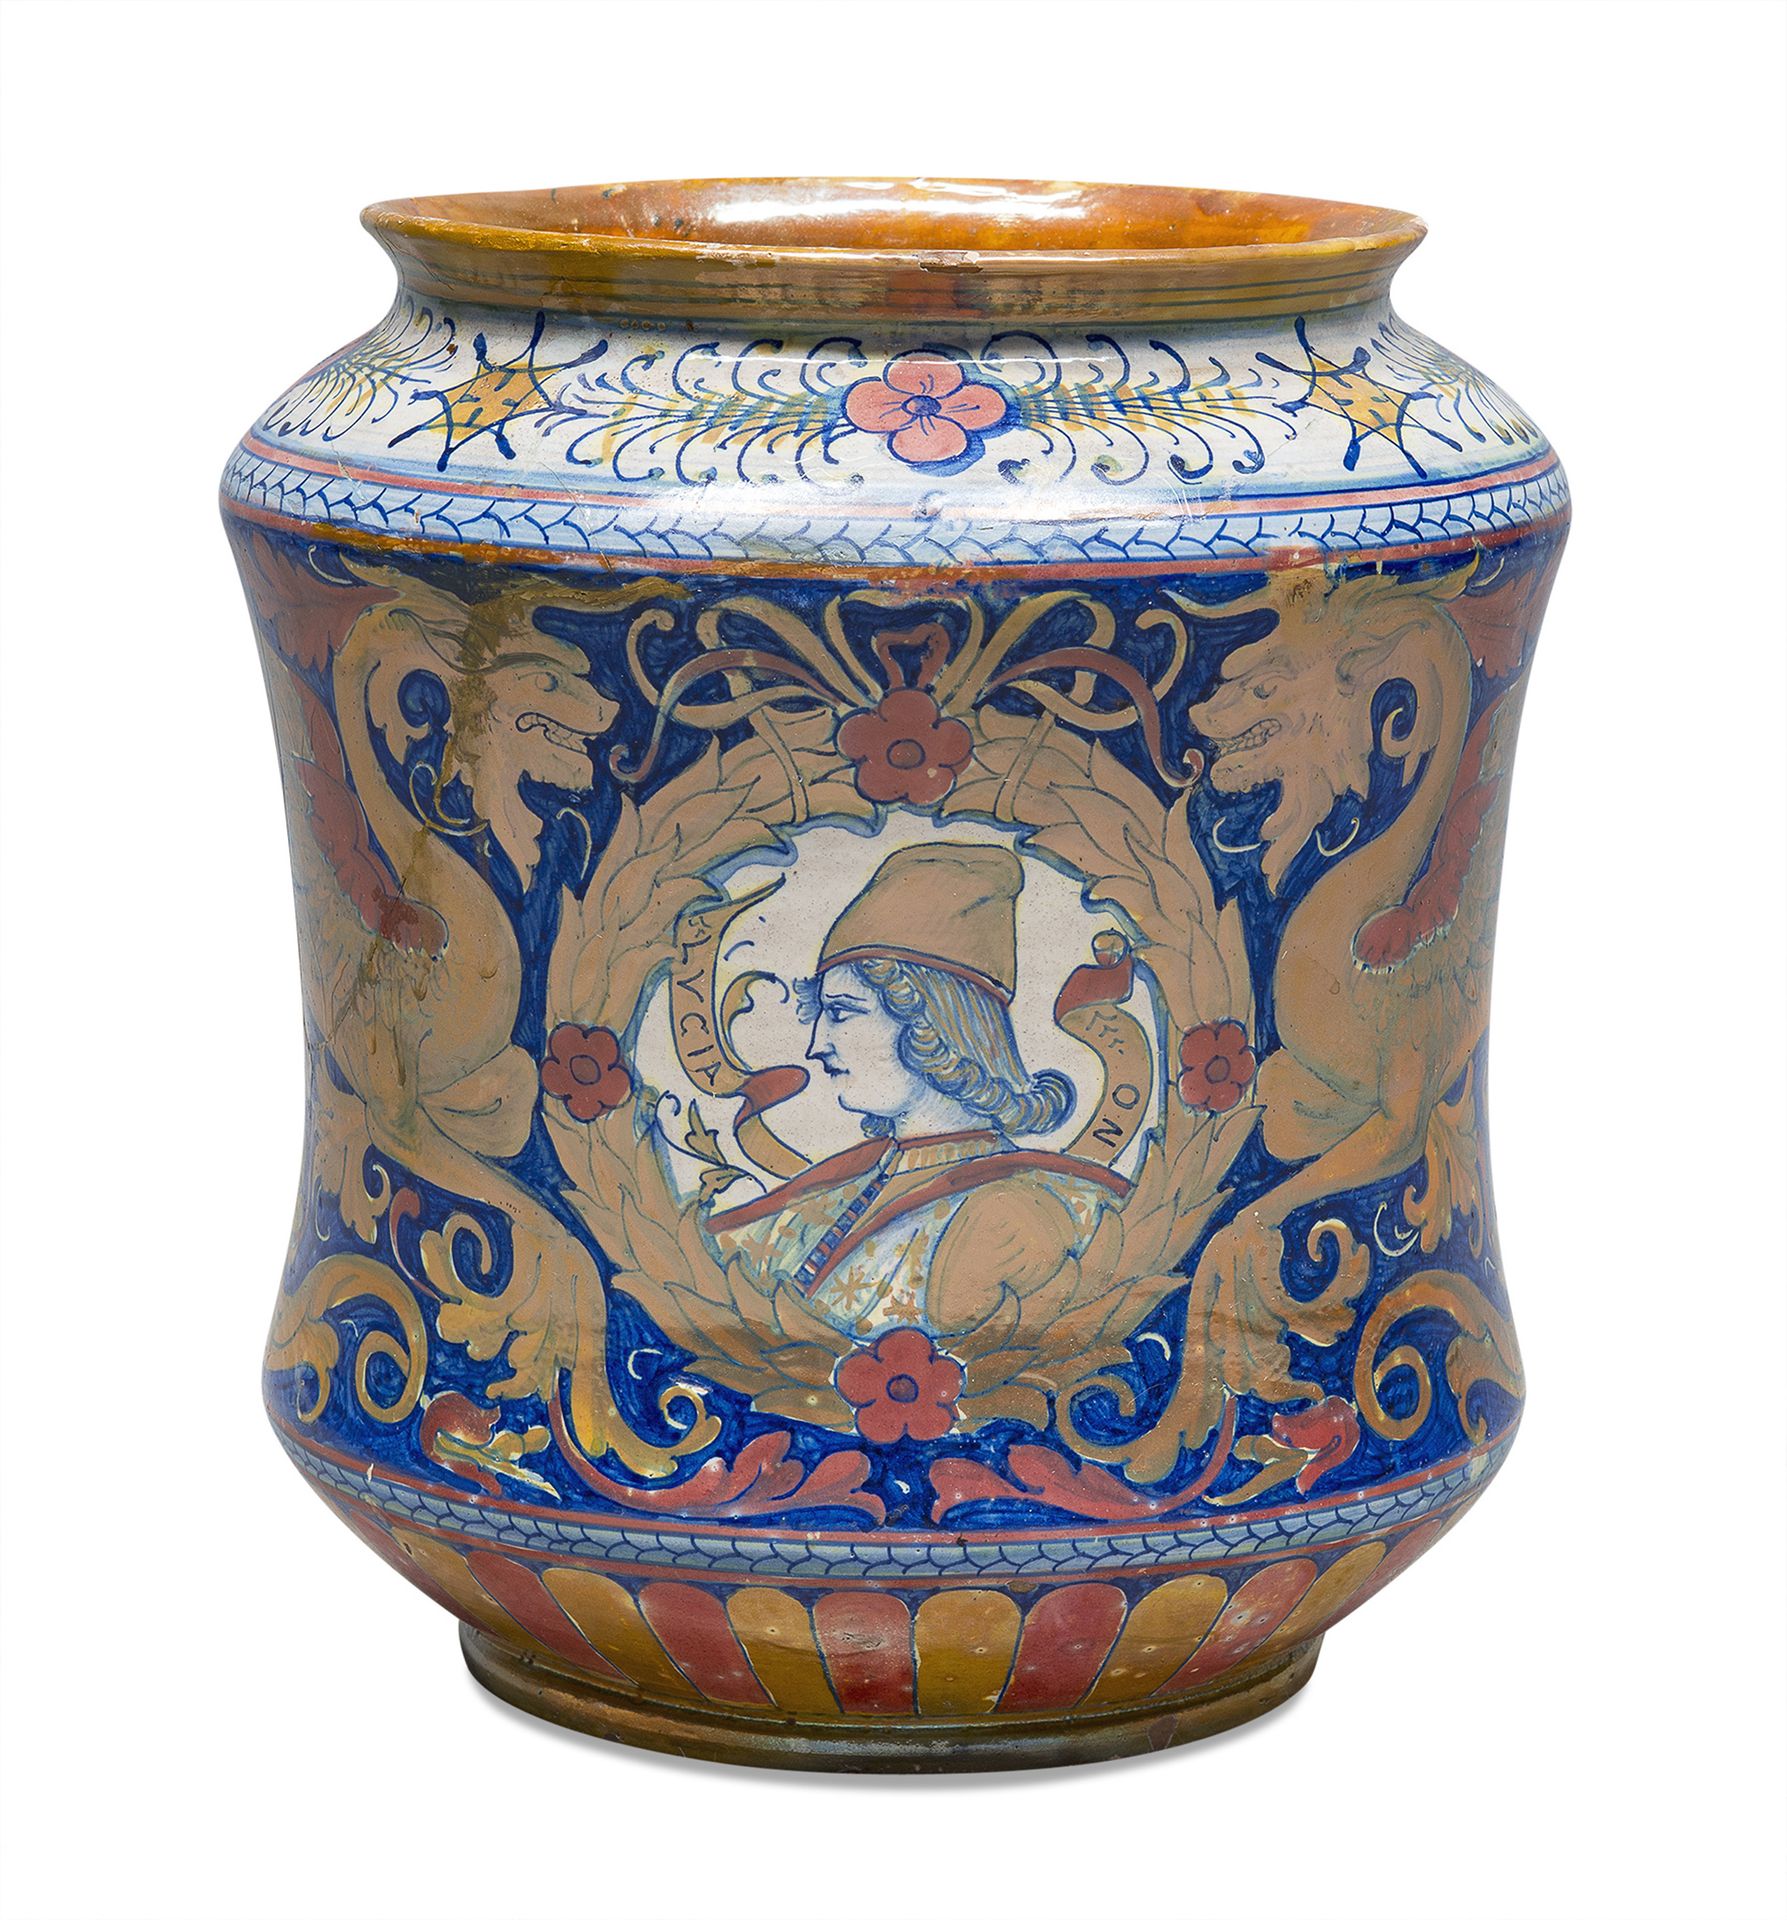 Null 光泽陶瓷花瓶，SANTAELLI 19世纪末

带有钴、金和多色的怪诞装饰和文艺复兴时期的轮廓。

底座下有蓝色标记。

尺寸为30 x 26厘米。
&hellip;